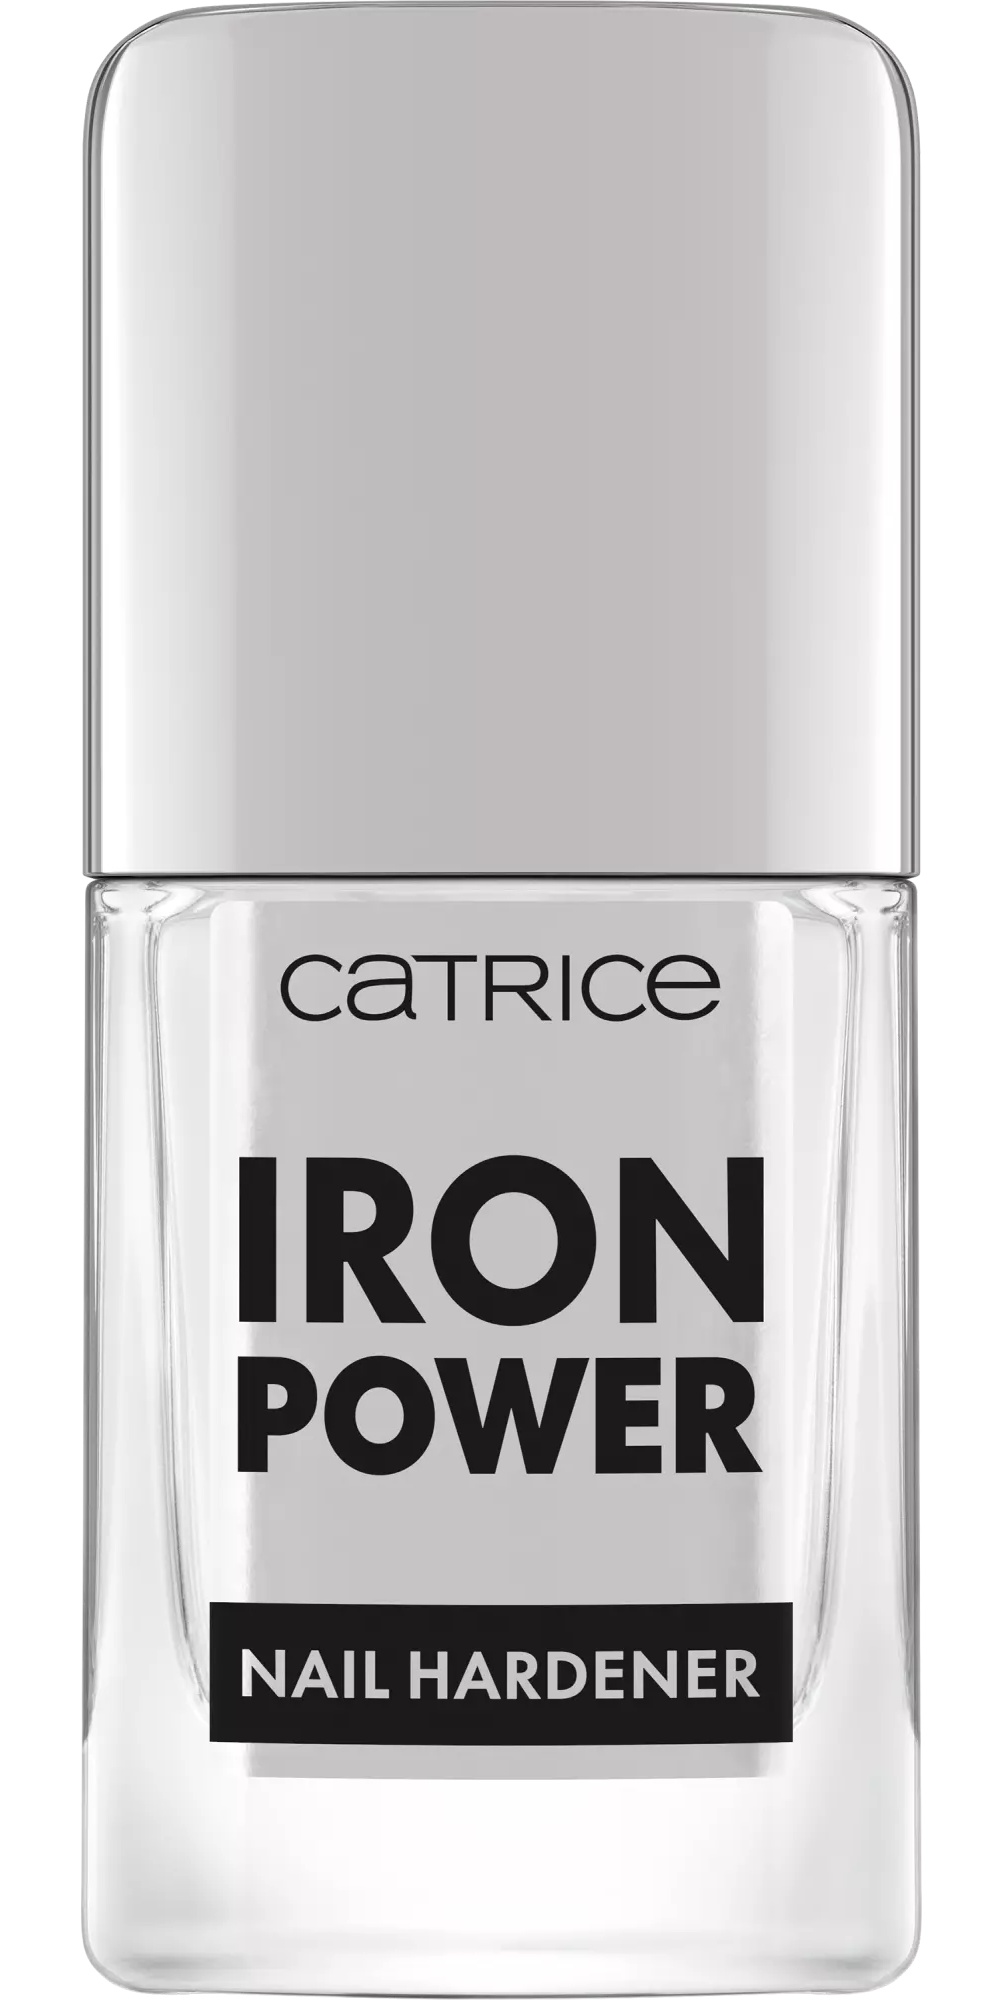 Catrice Iron Power Nail Hardener